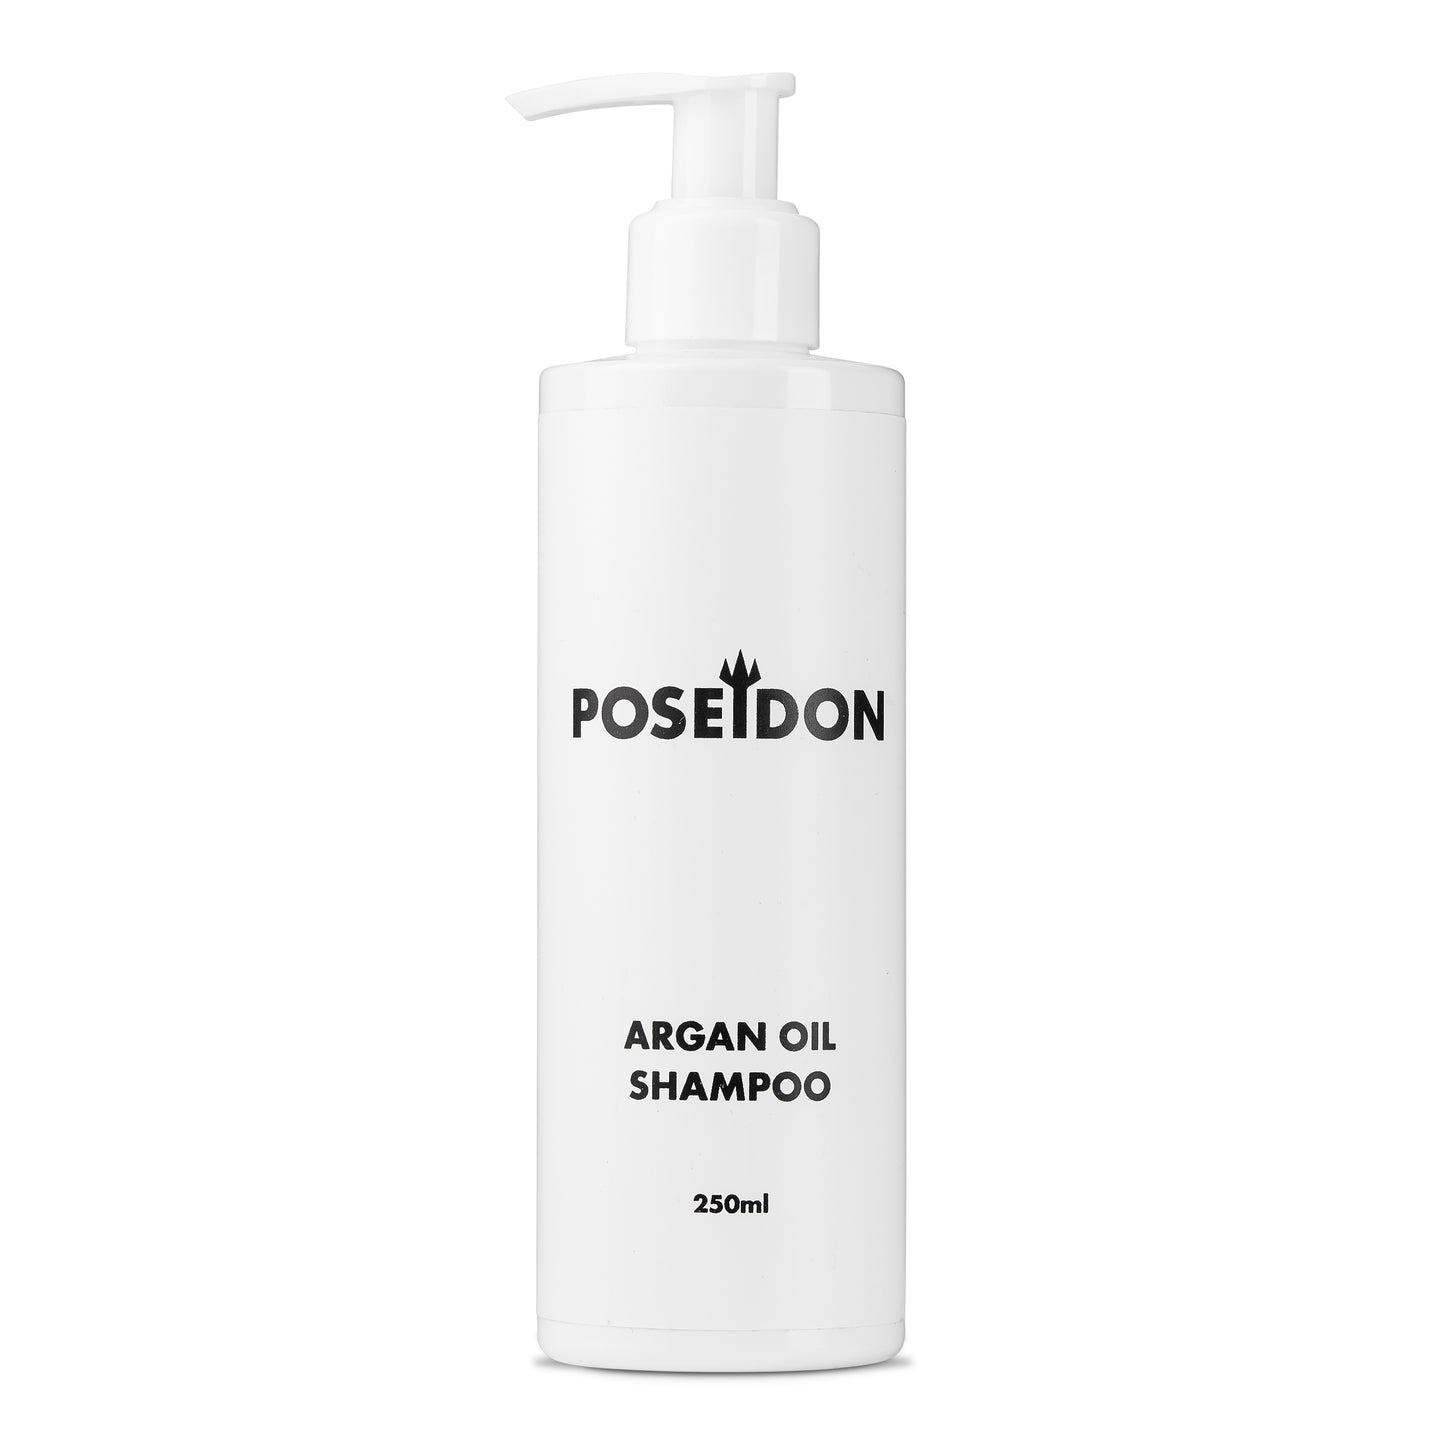 Poseidon Argan Oil Shampoo & Conditioner